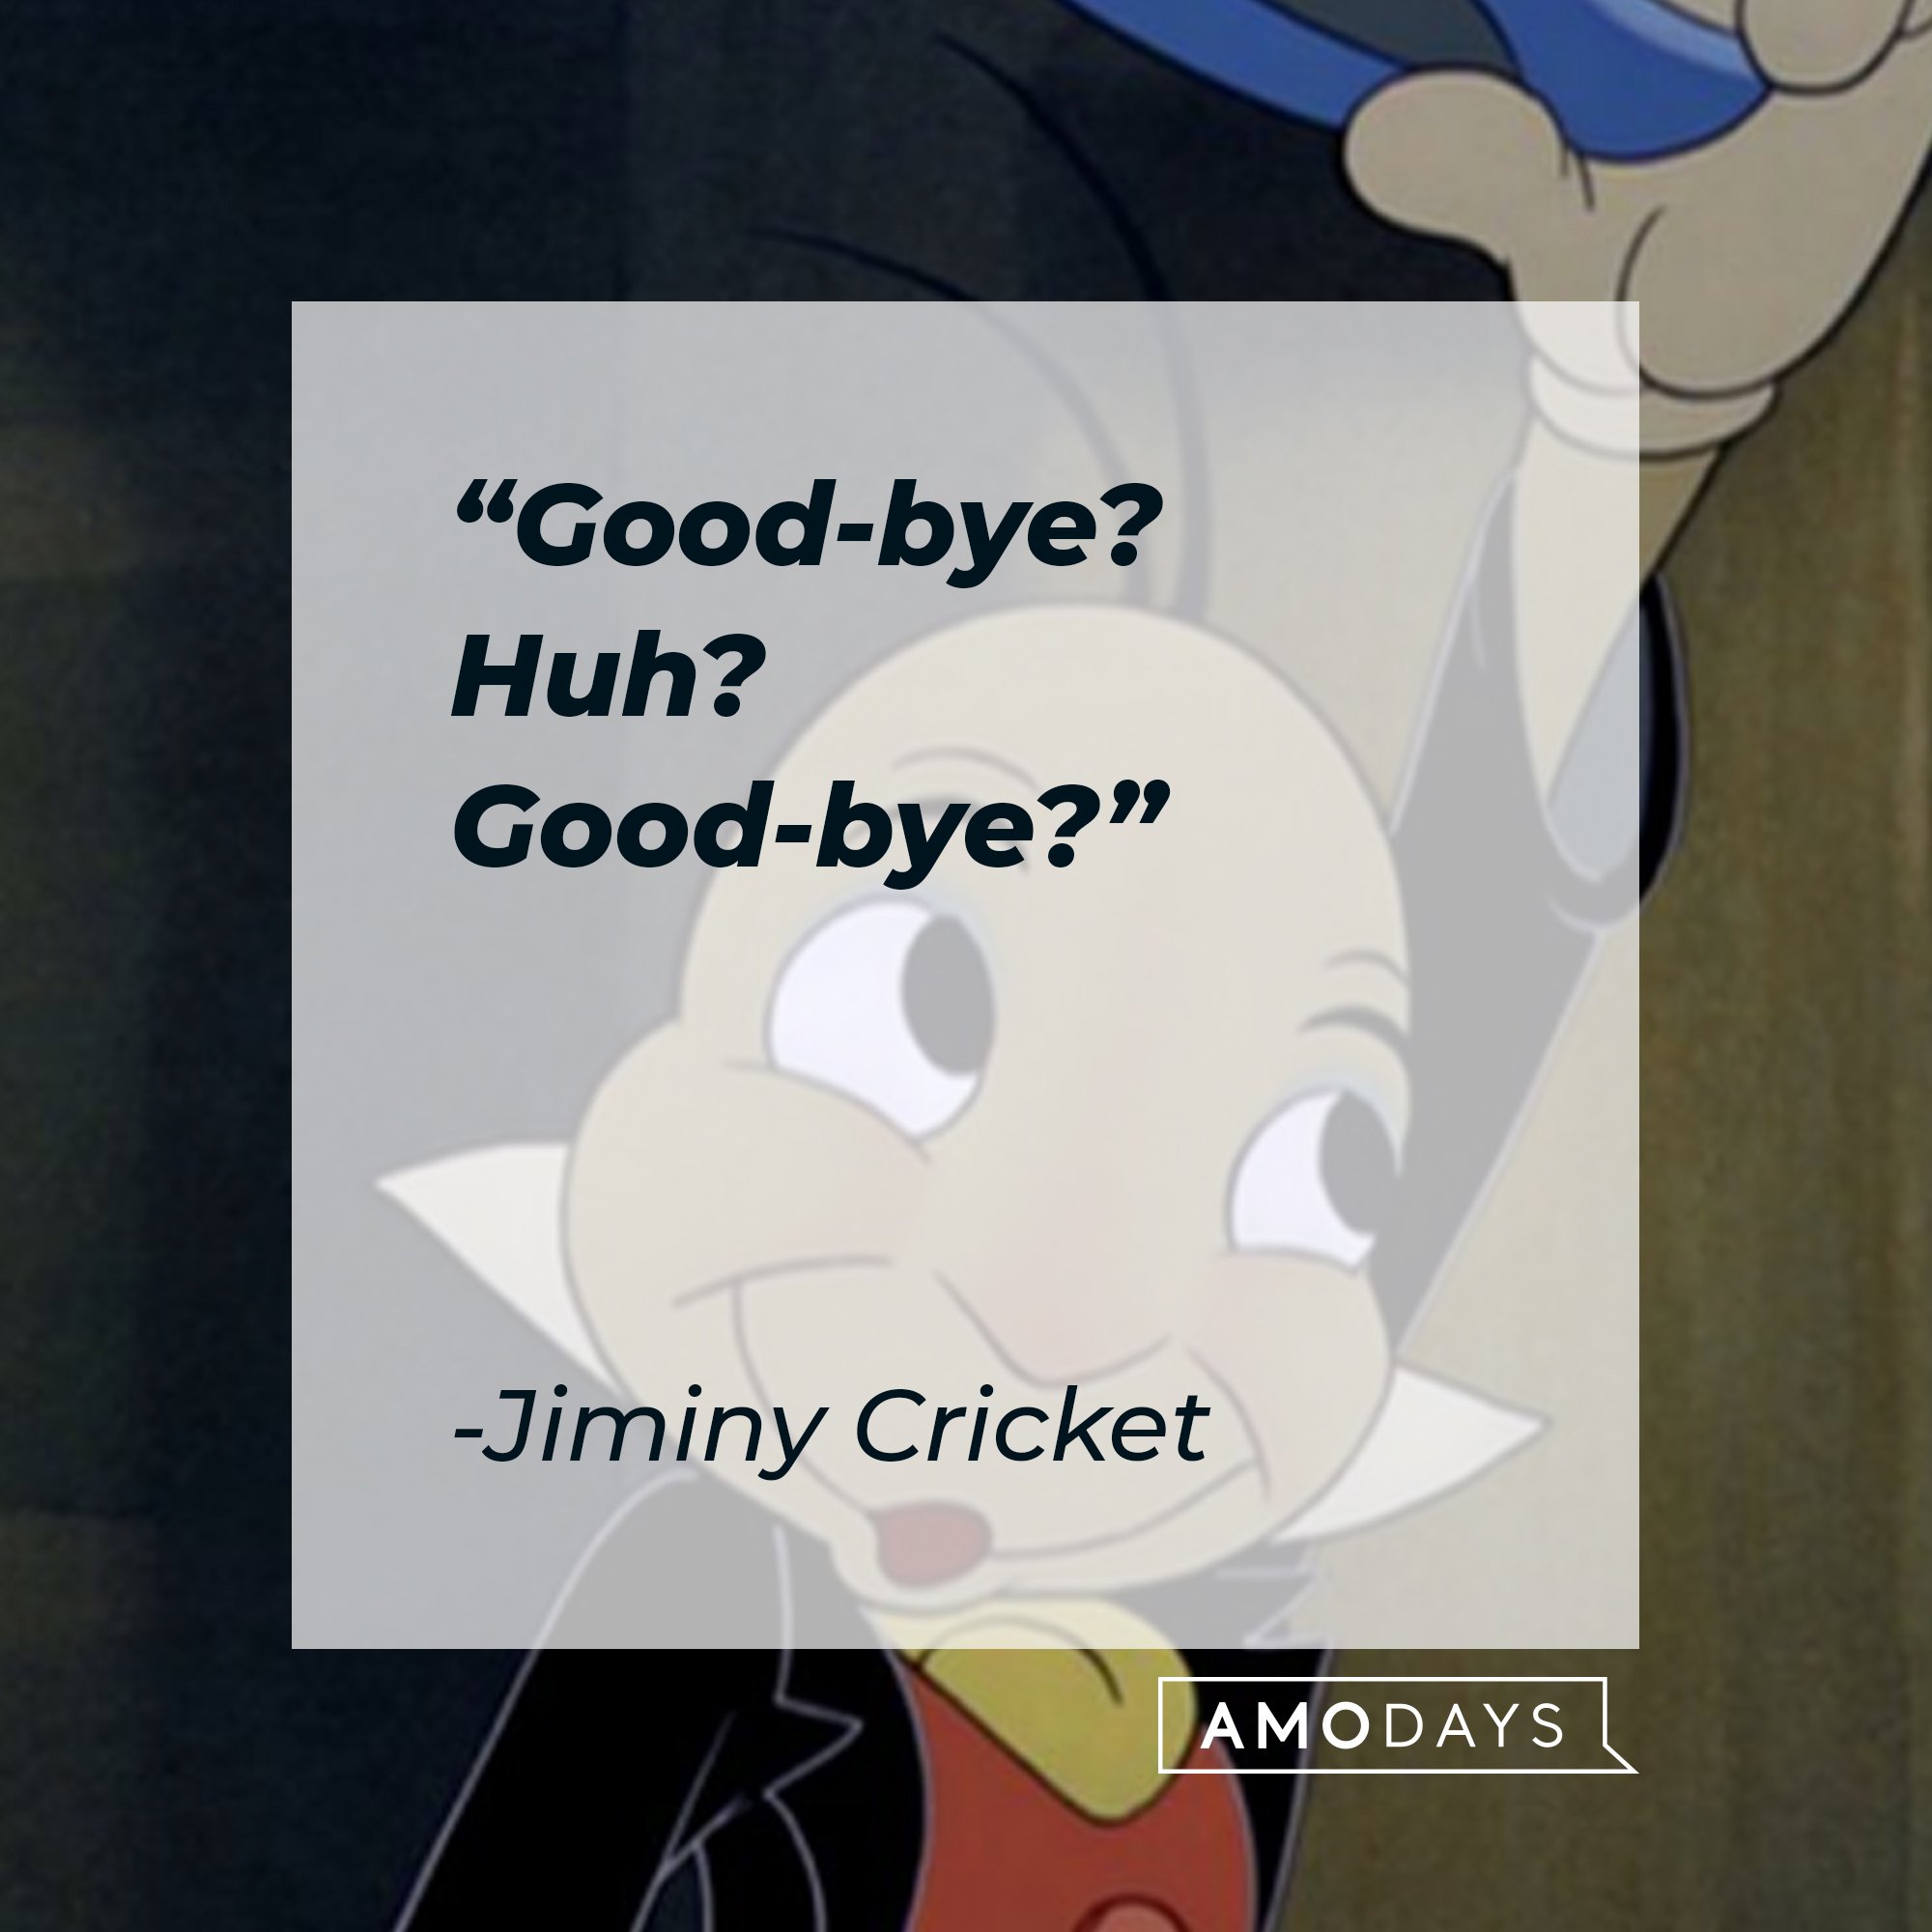 Jiminy Cricket's quote: "Good-bye? Huh? Good-bye?"  | Image: AmoDays